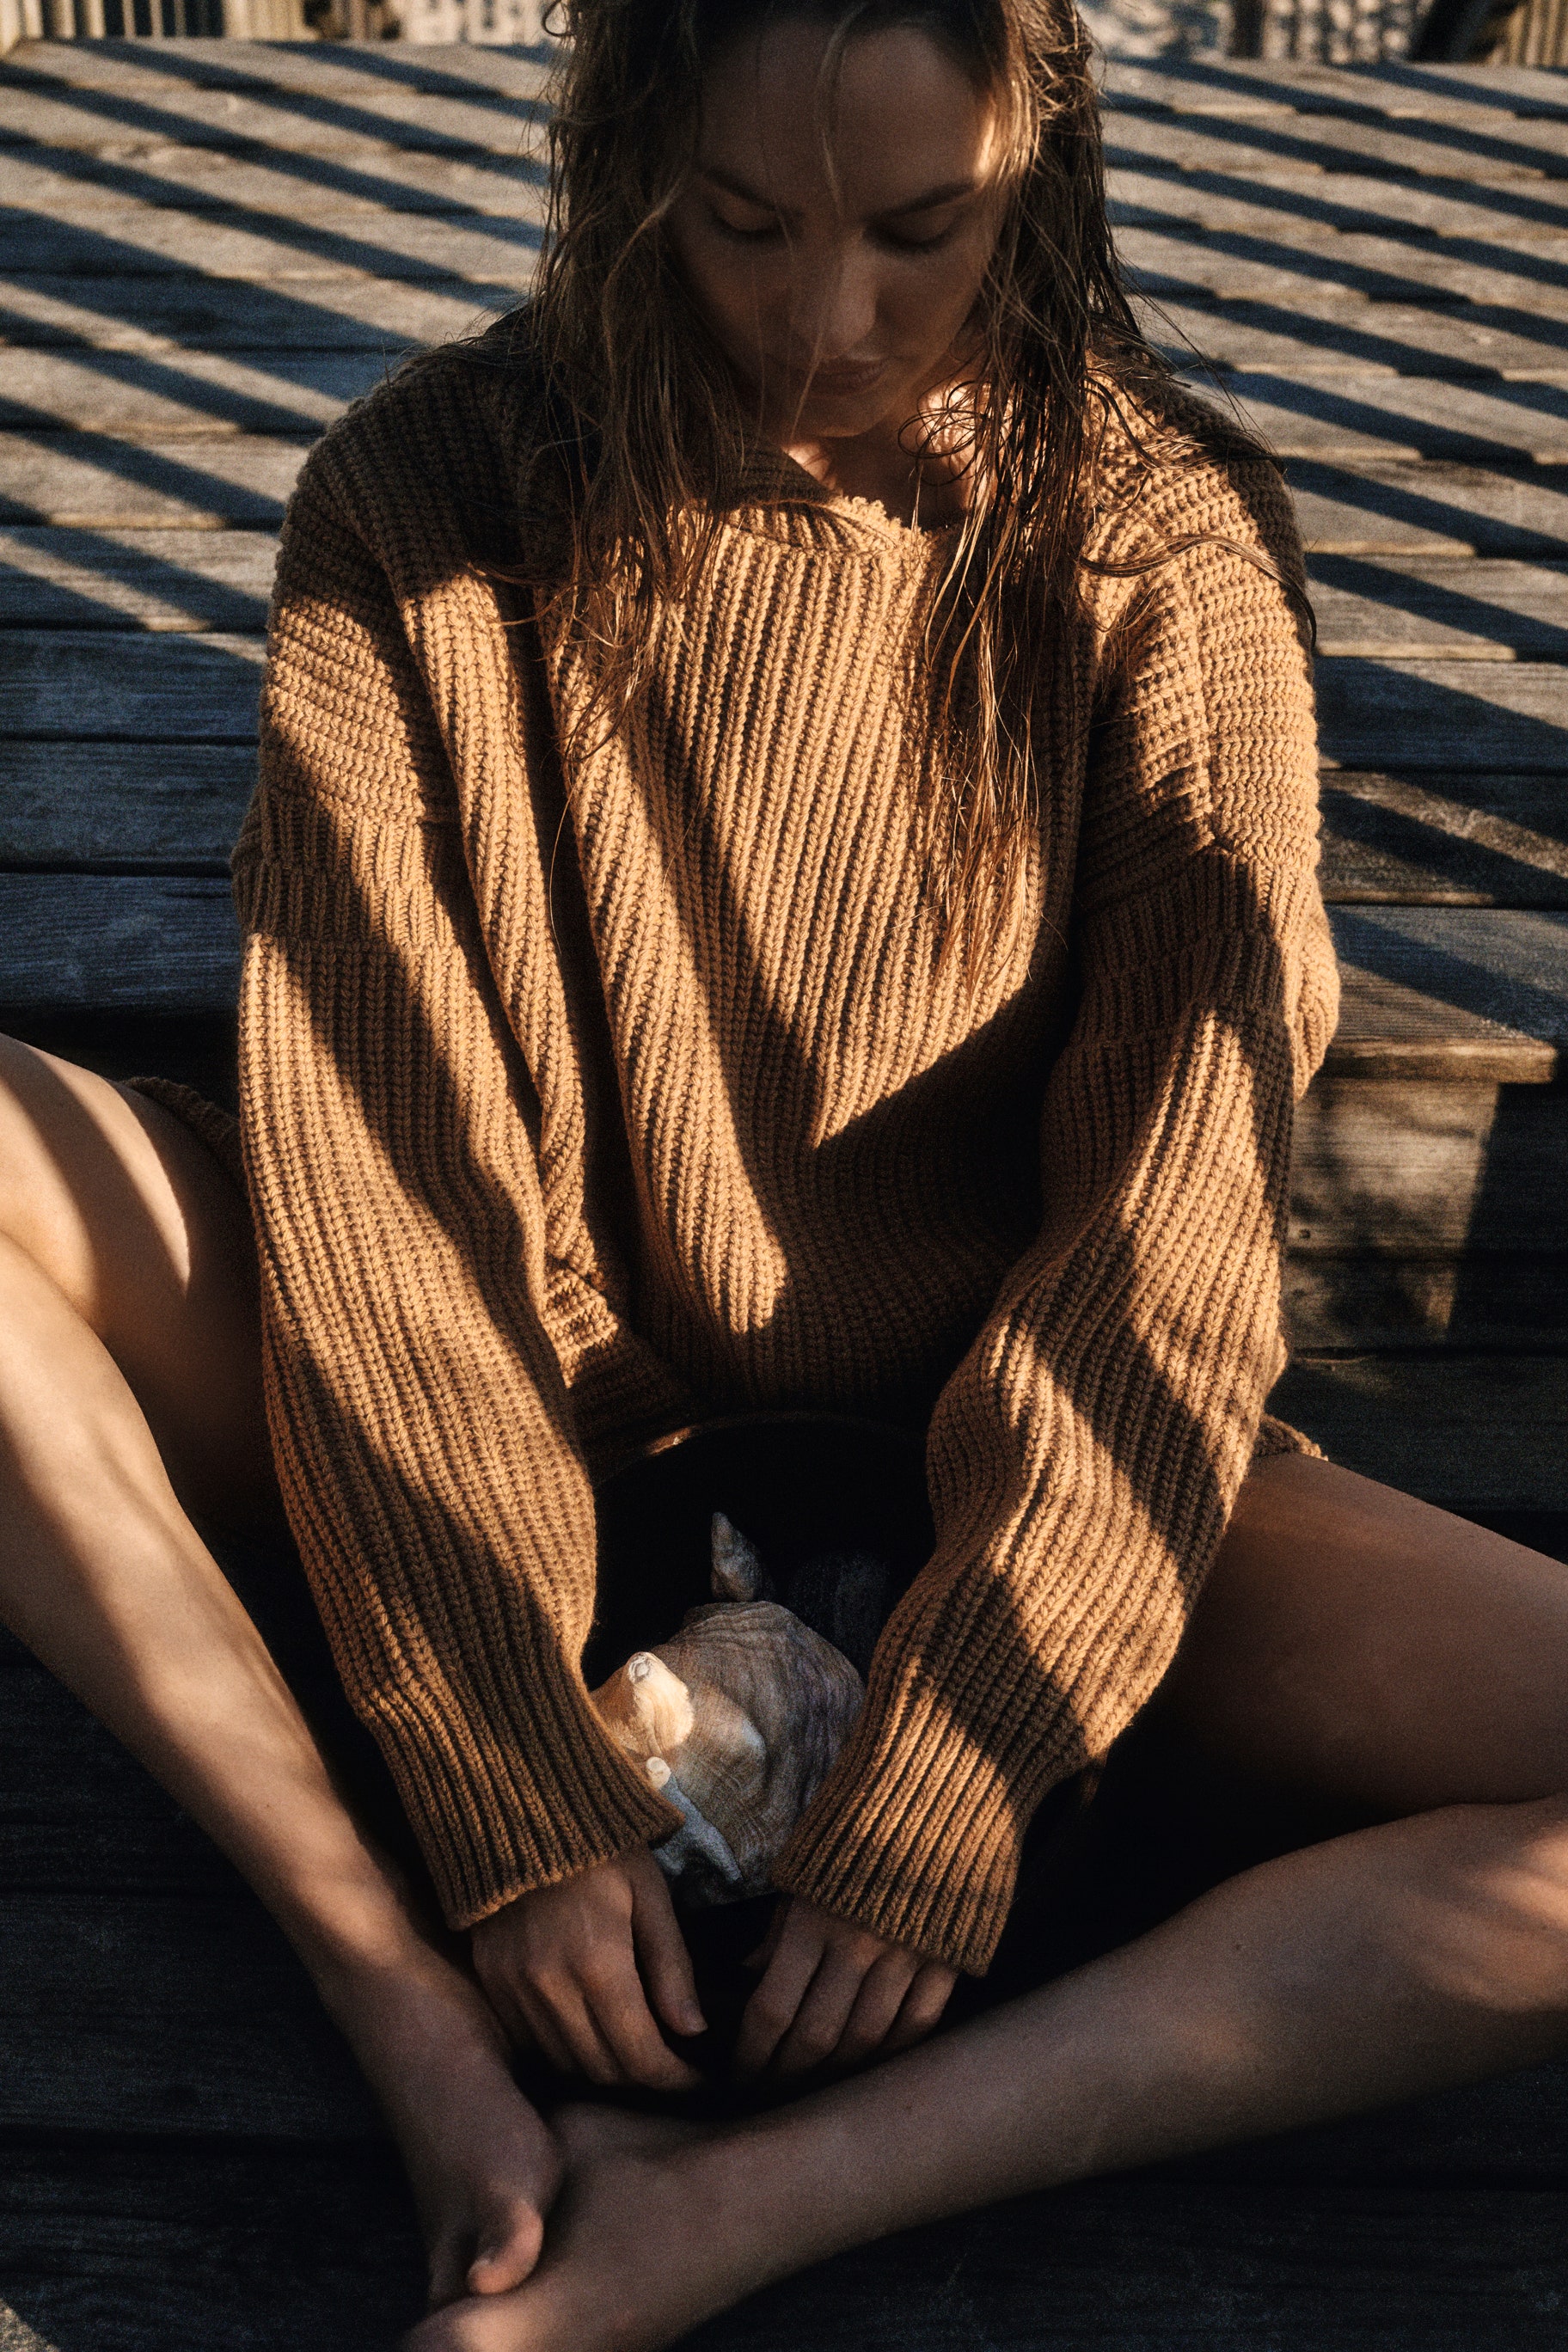 Model wearing brown coloured woolen dress